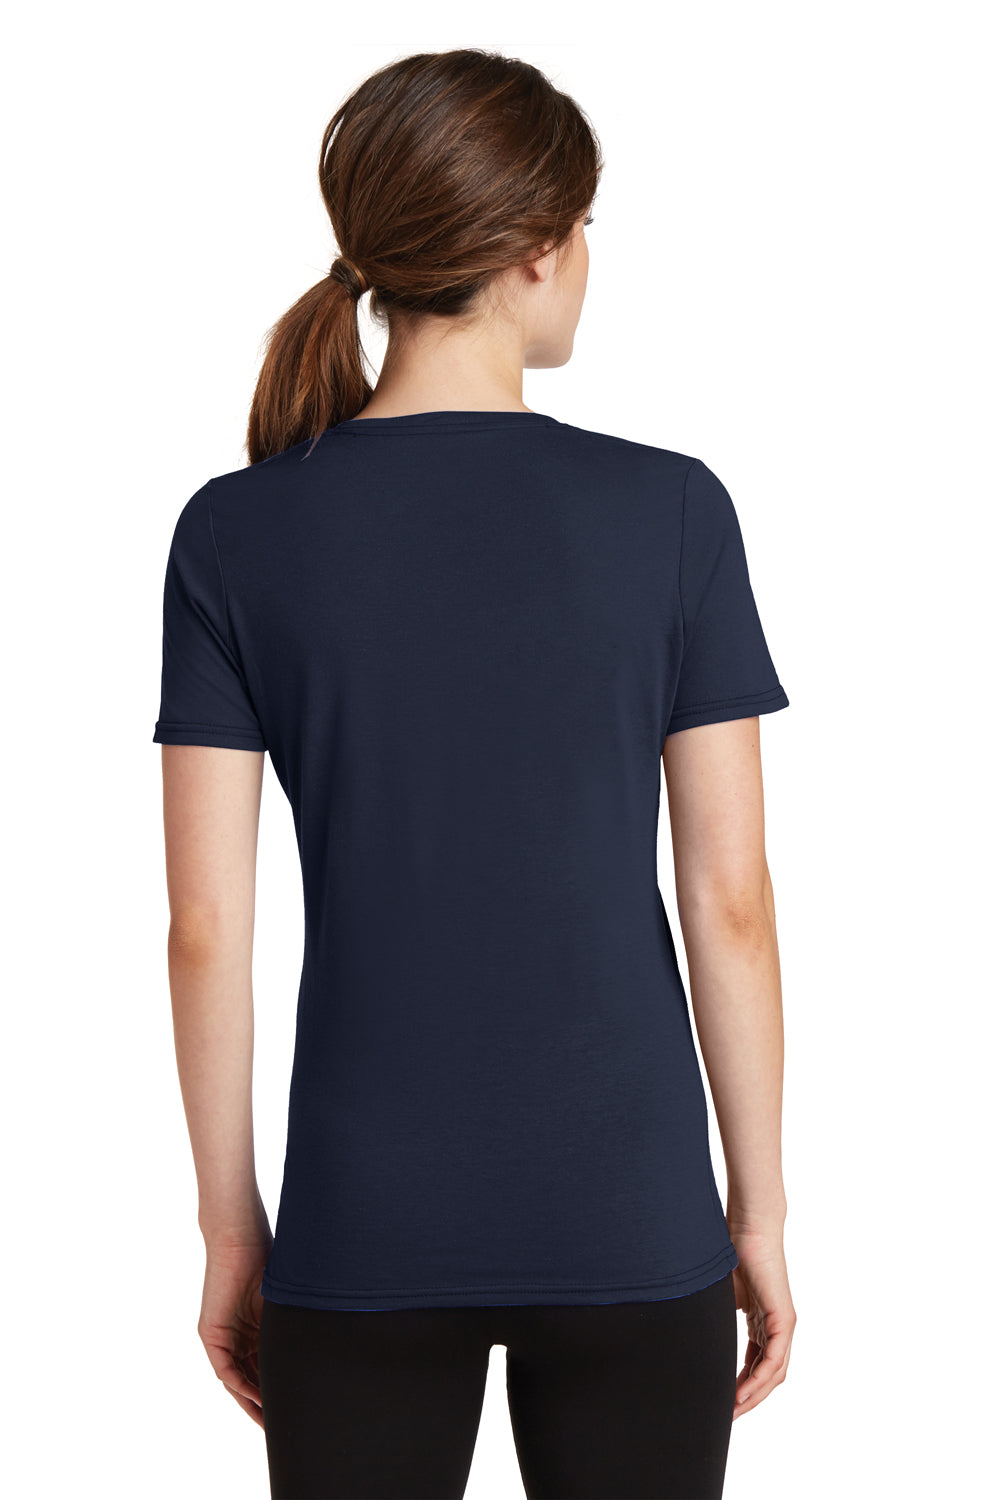 Port & Company LPC381V Womens Dry Zone Performance Moisture Wicking Short Sleeve V-Neck T-Shirt Navy Blue Back